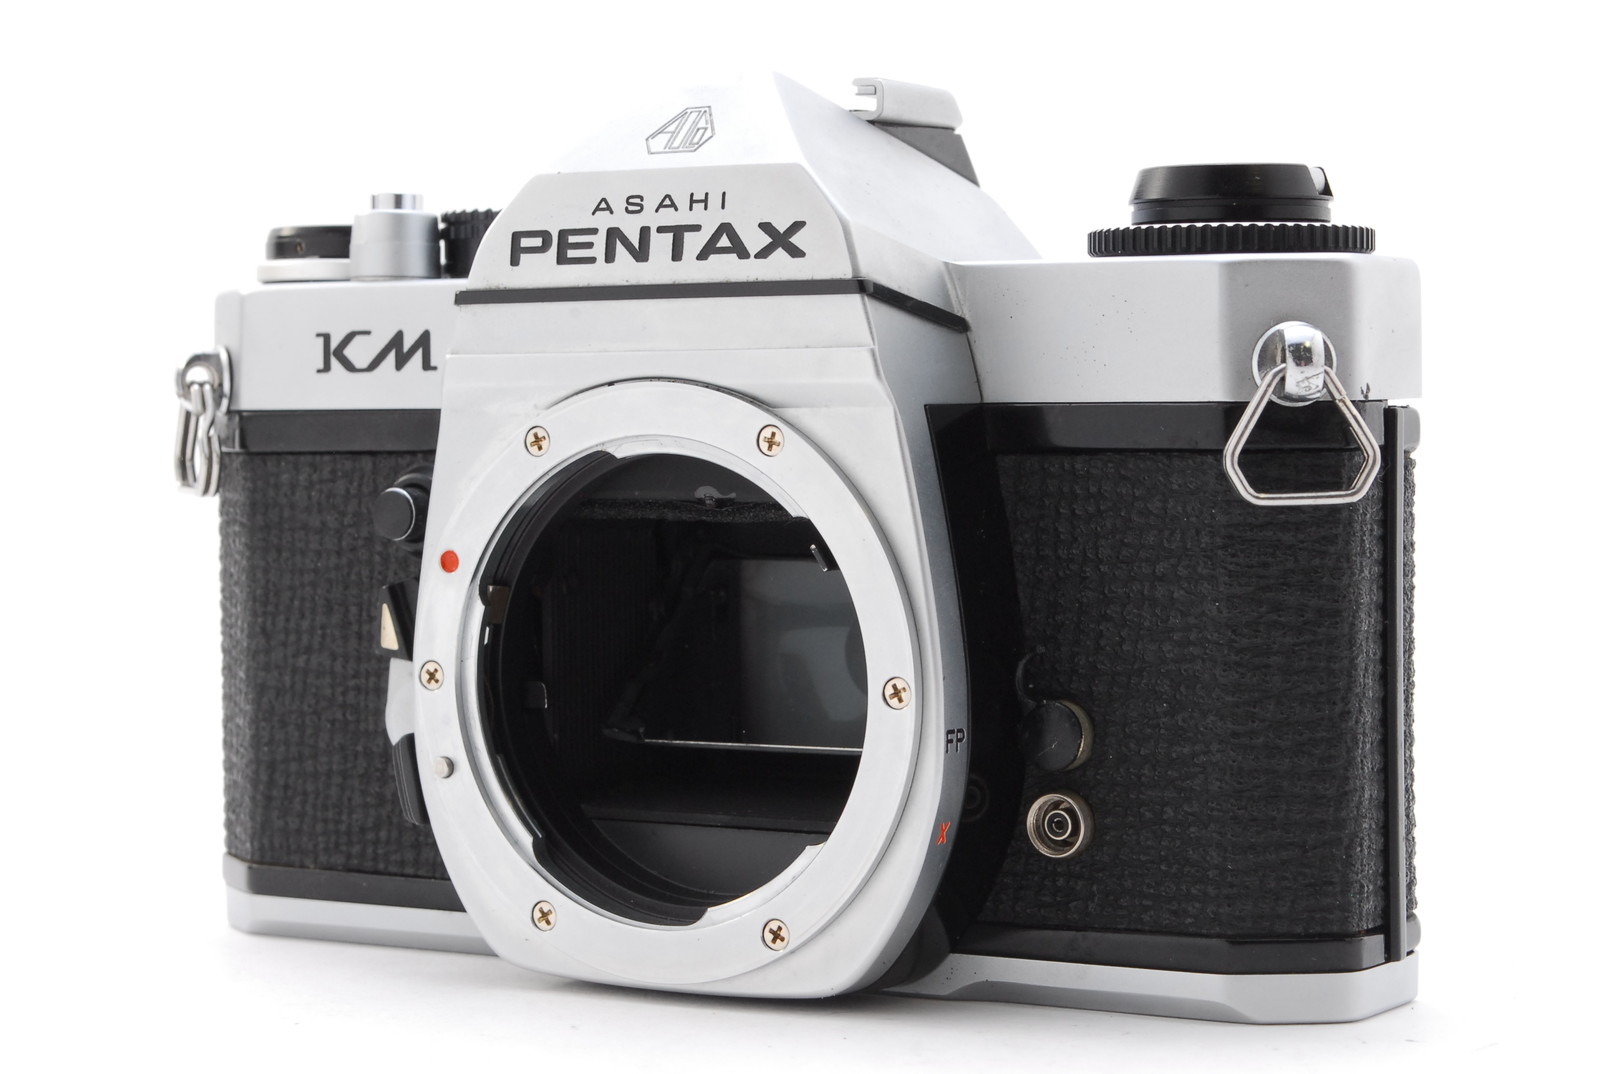 PROMOTION. EXC+++ Asahi Pentax KM 35mm SLR Film Camera Body from Japan